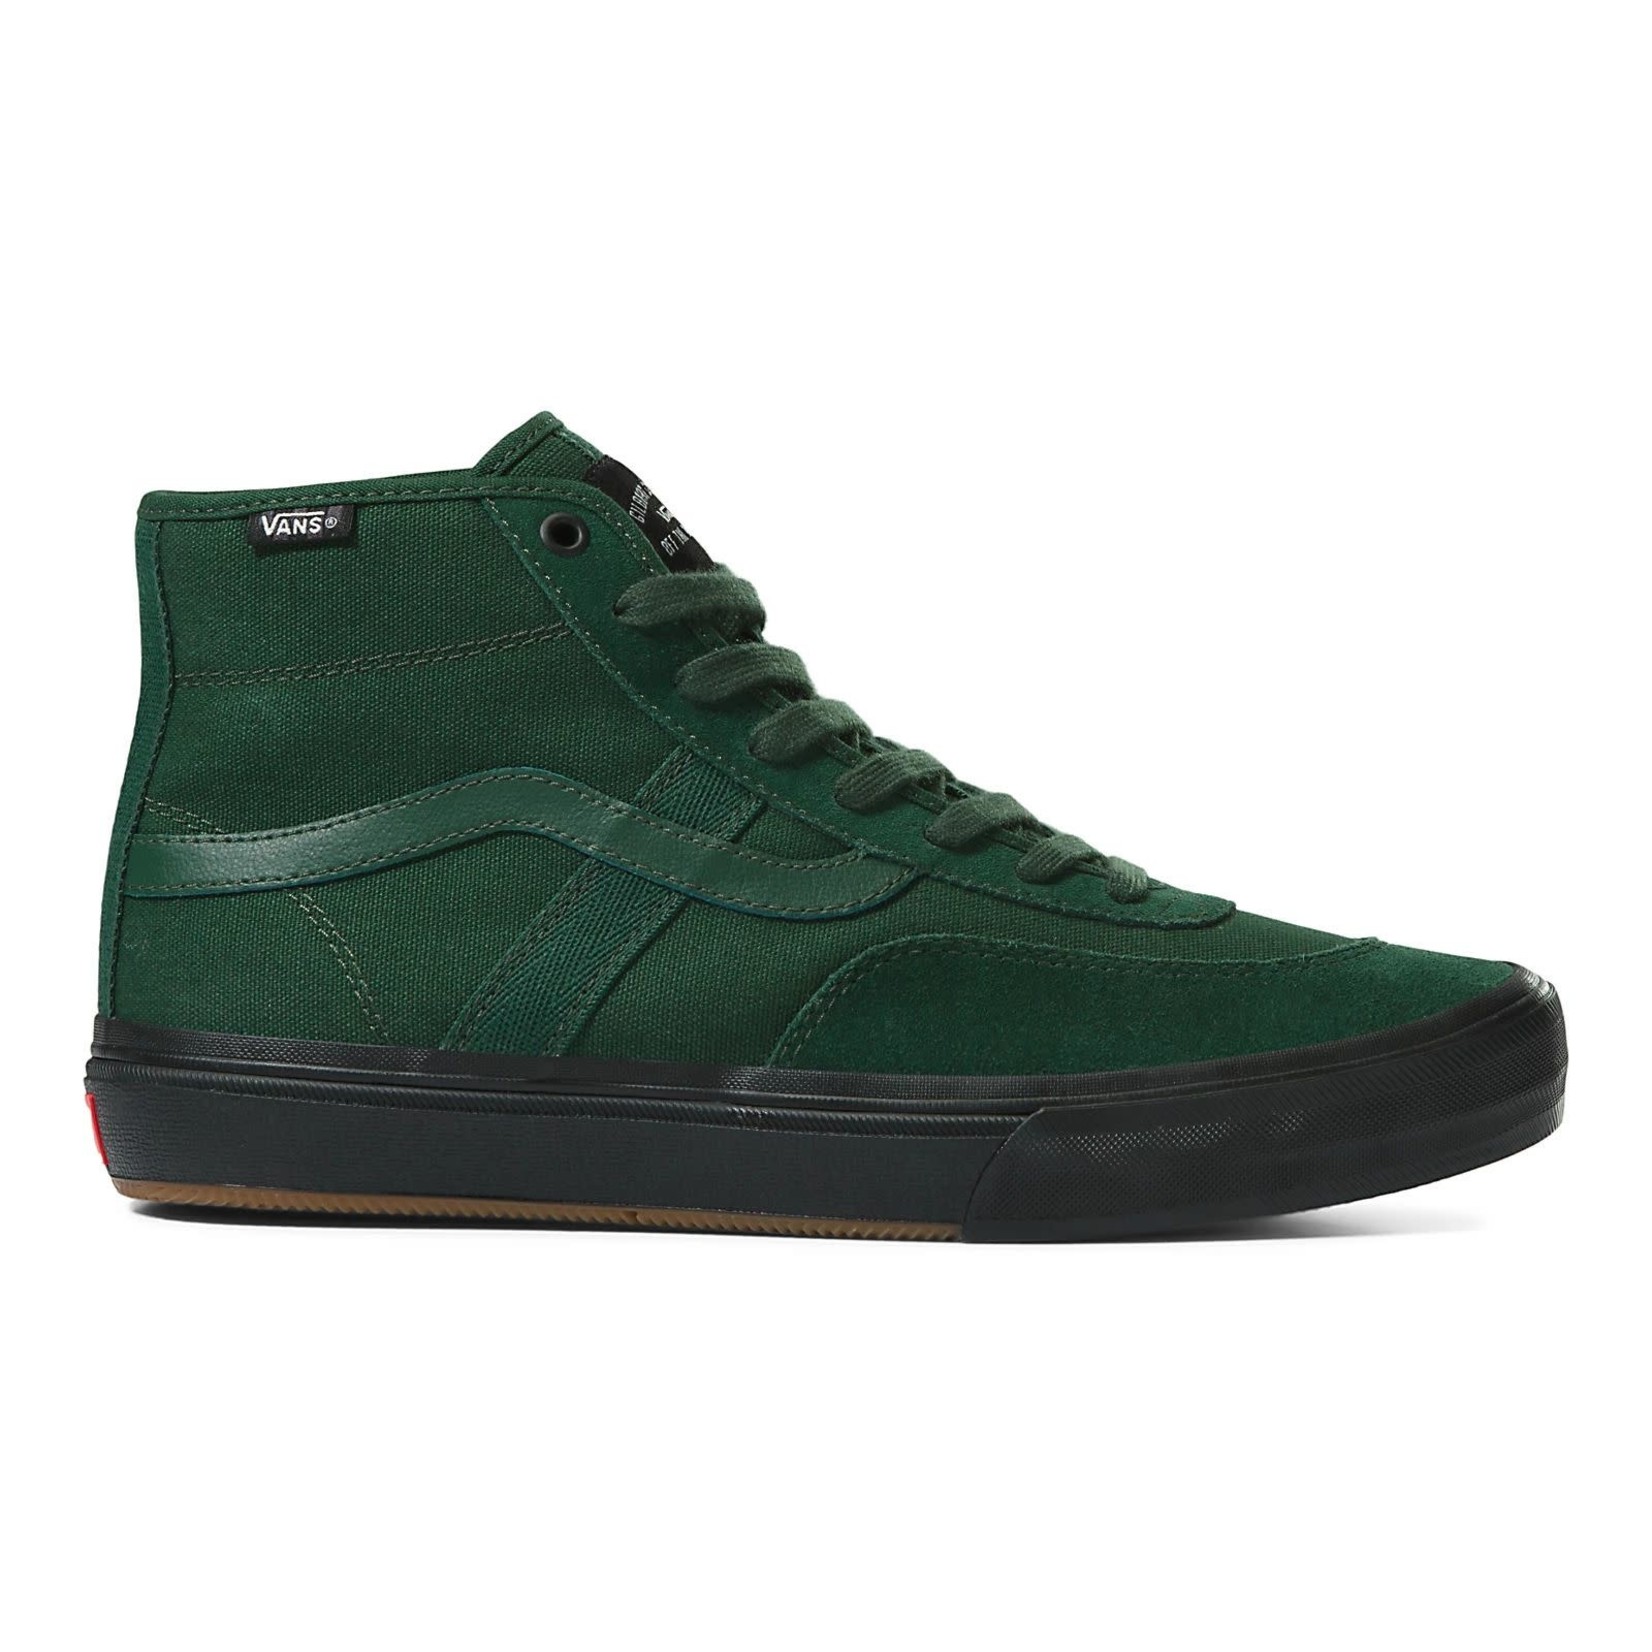 Vans Vans Gilbert Crockett High Skate Shoe - Dark Green/Black